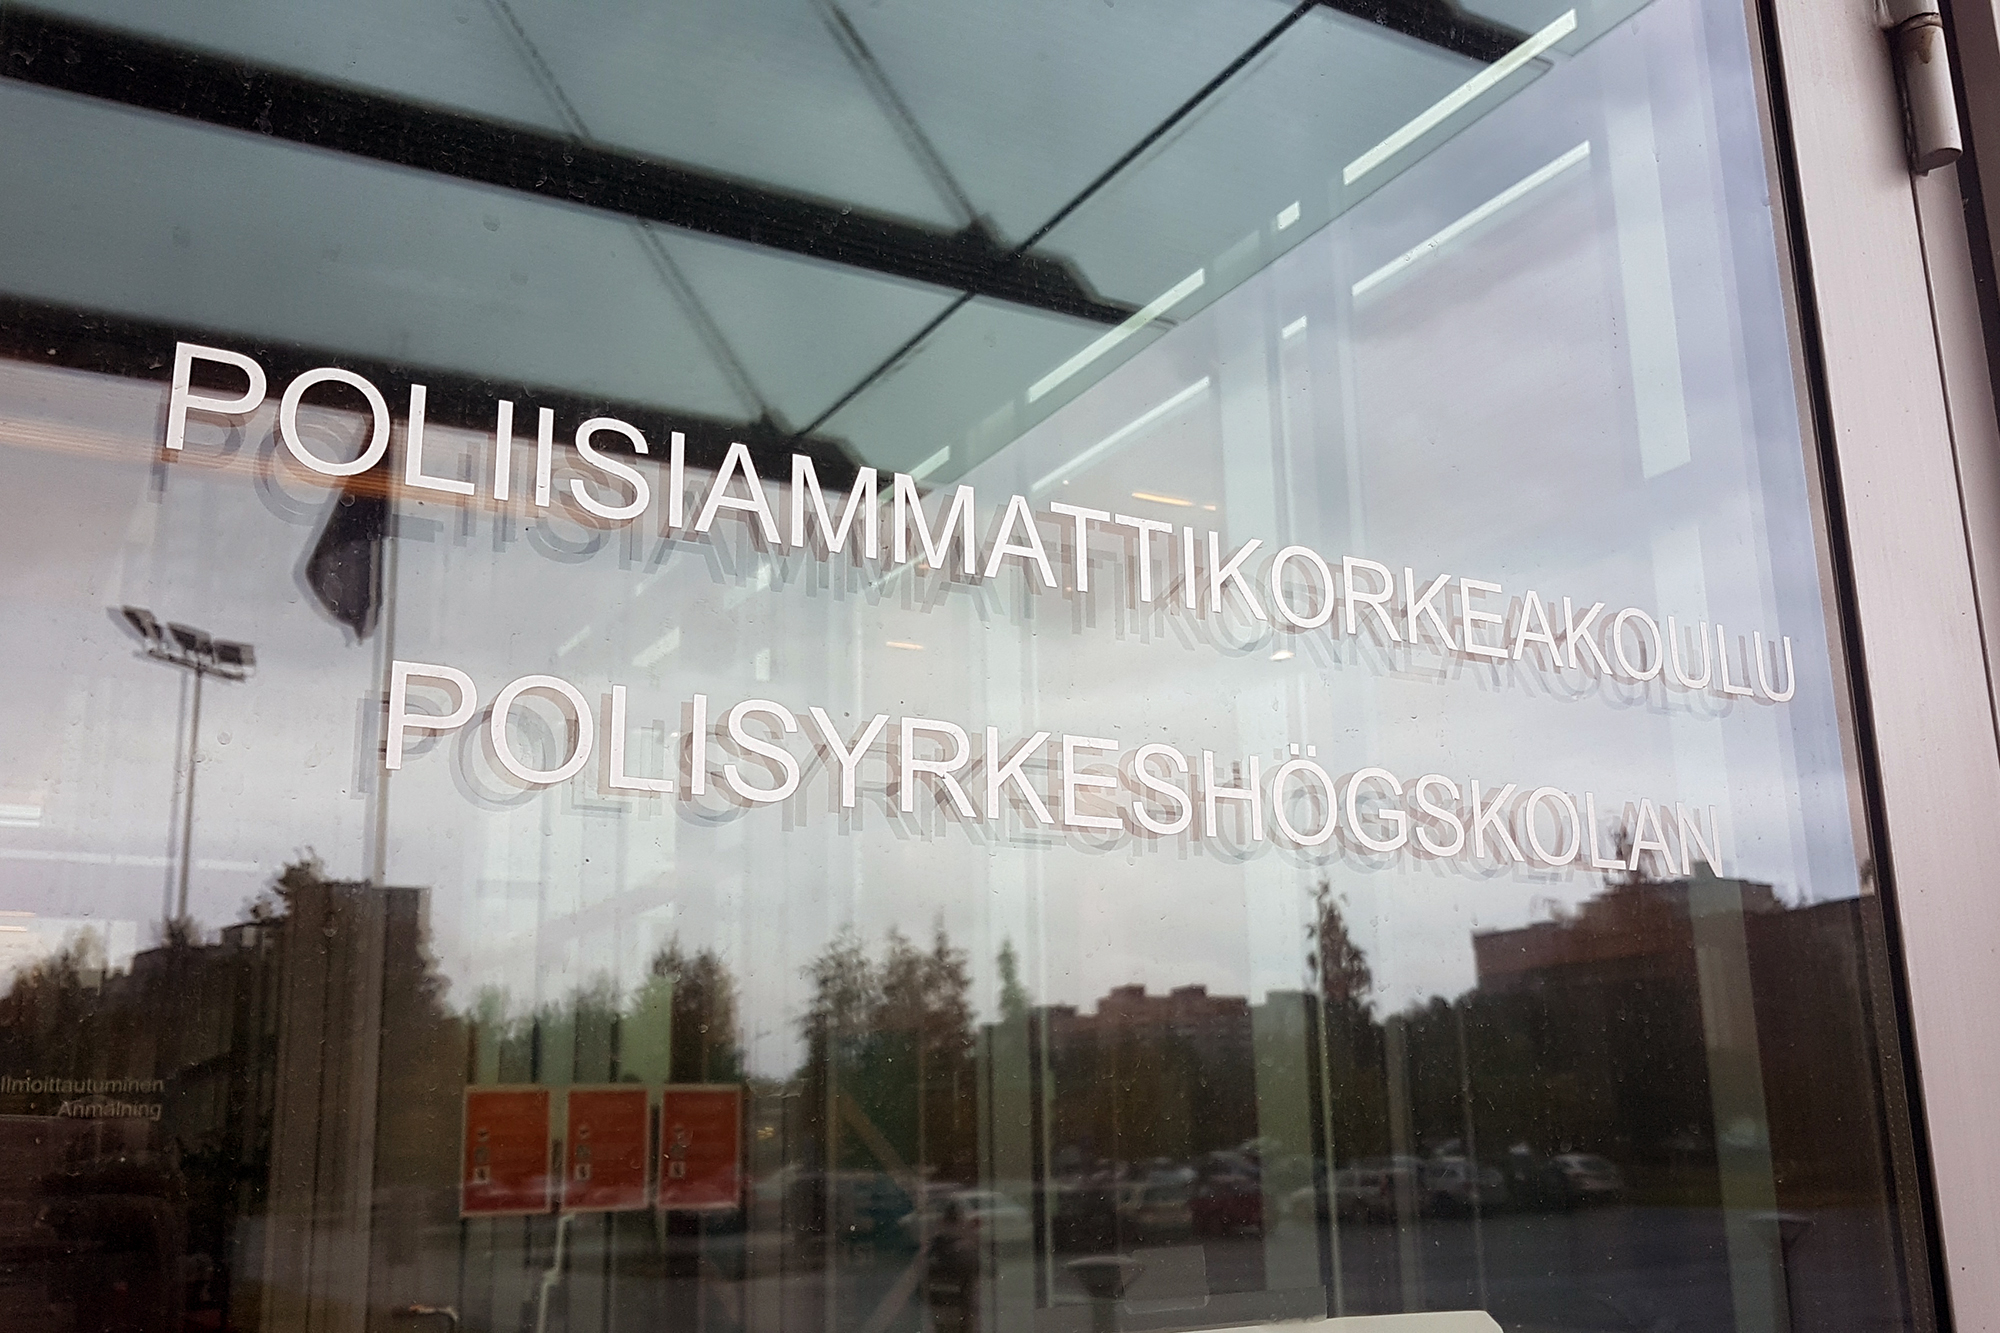 The glass front door of the Police University College, which reads ‘Poliisiammattikorkeakoulu Polisyrkeshögskolan’.